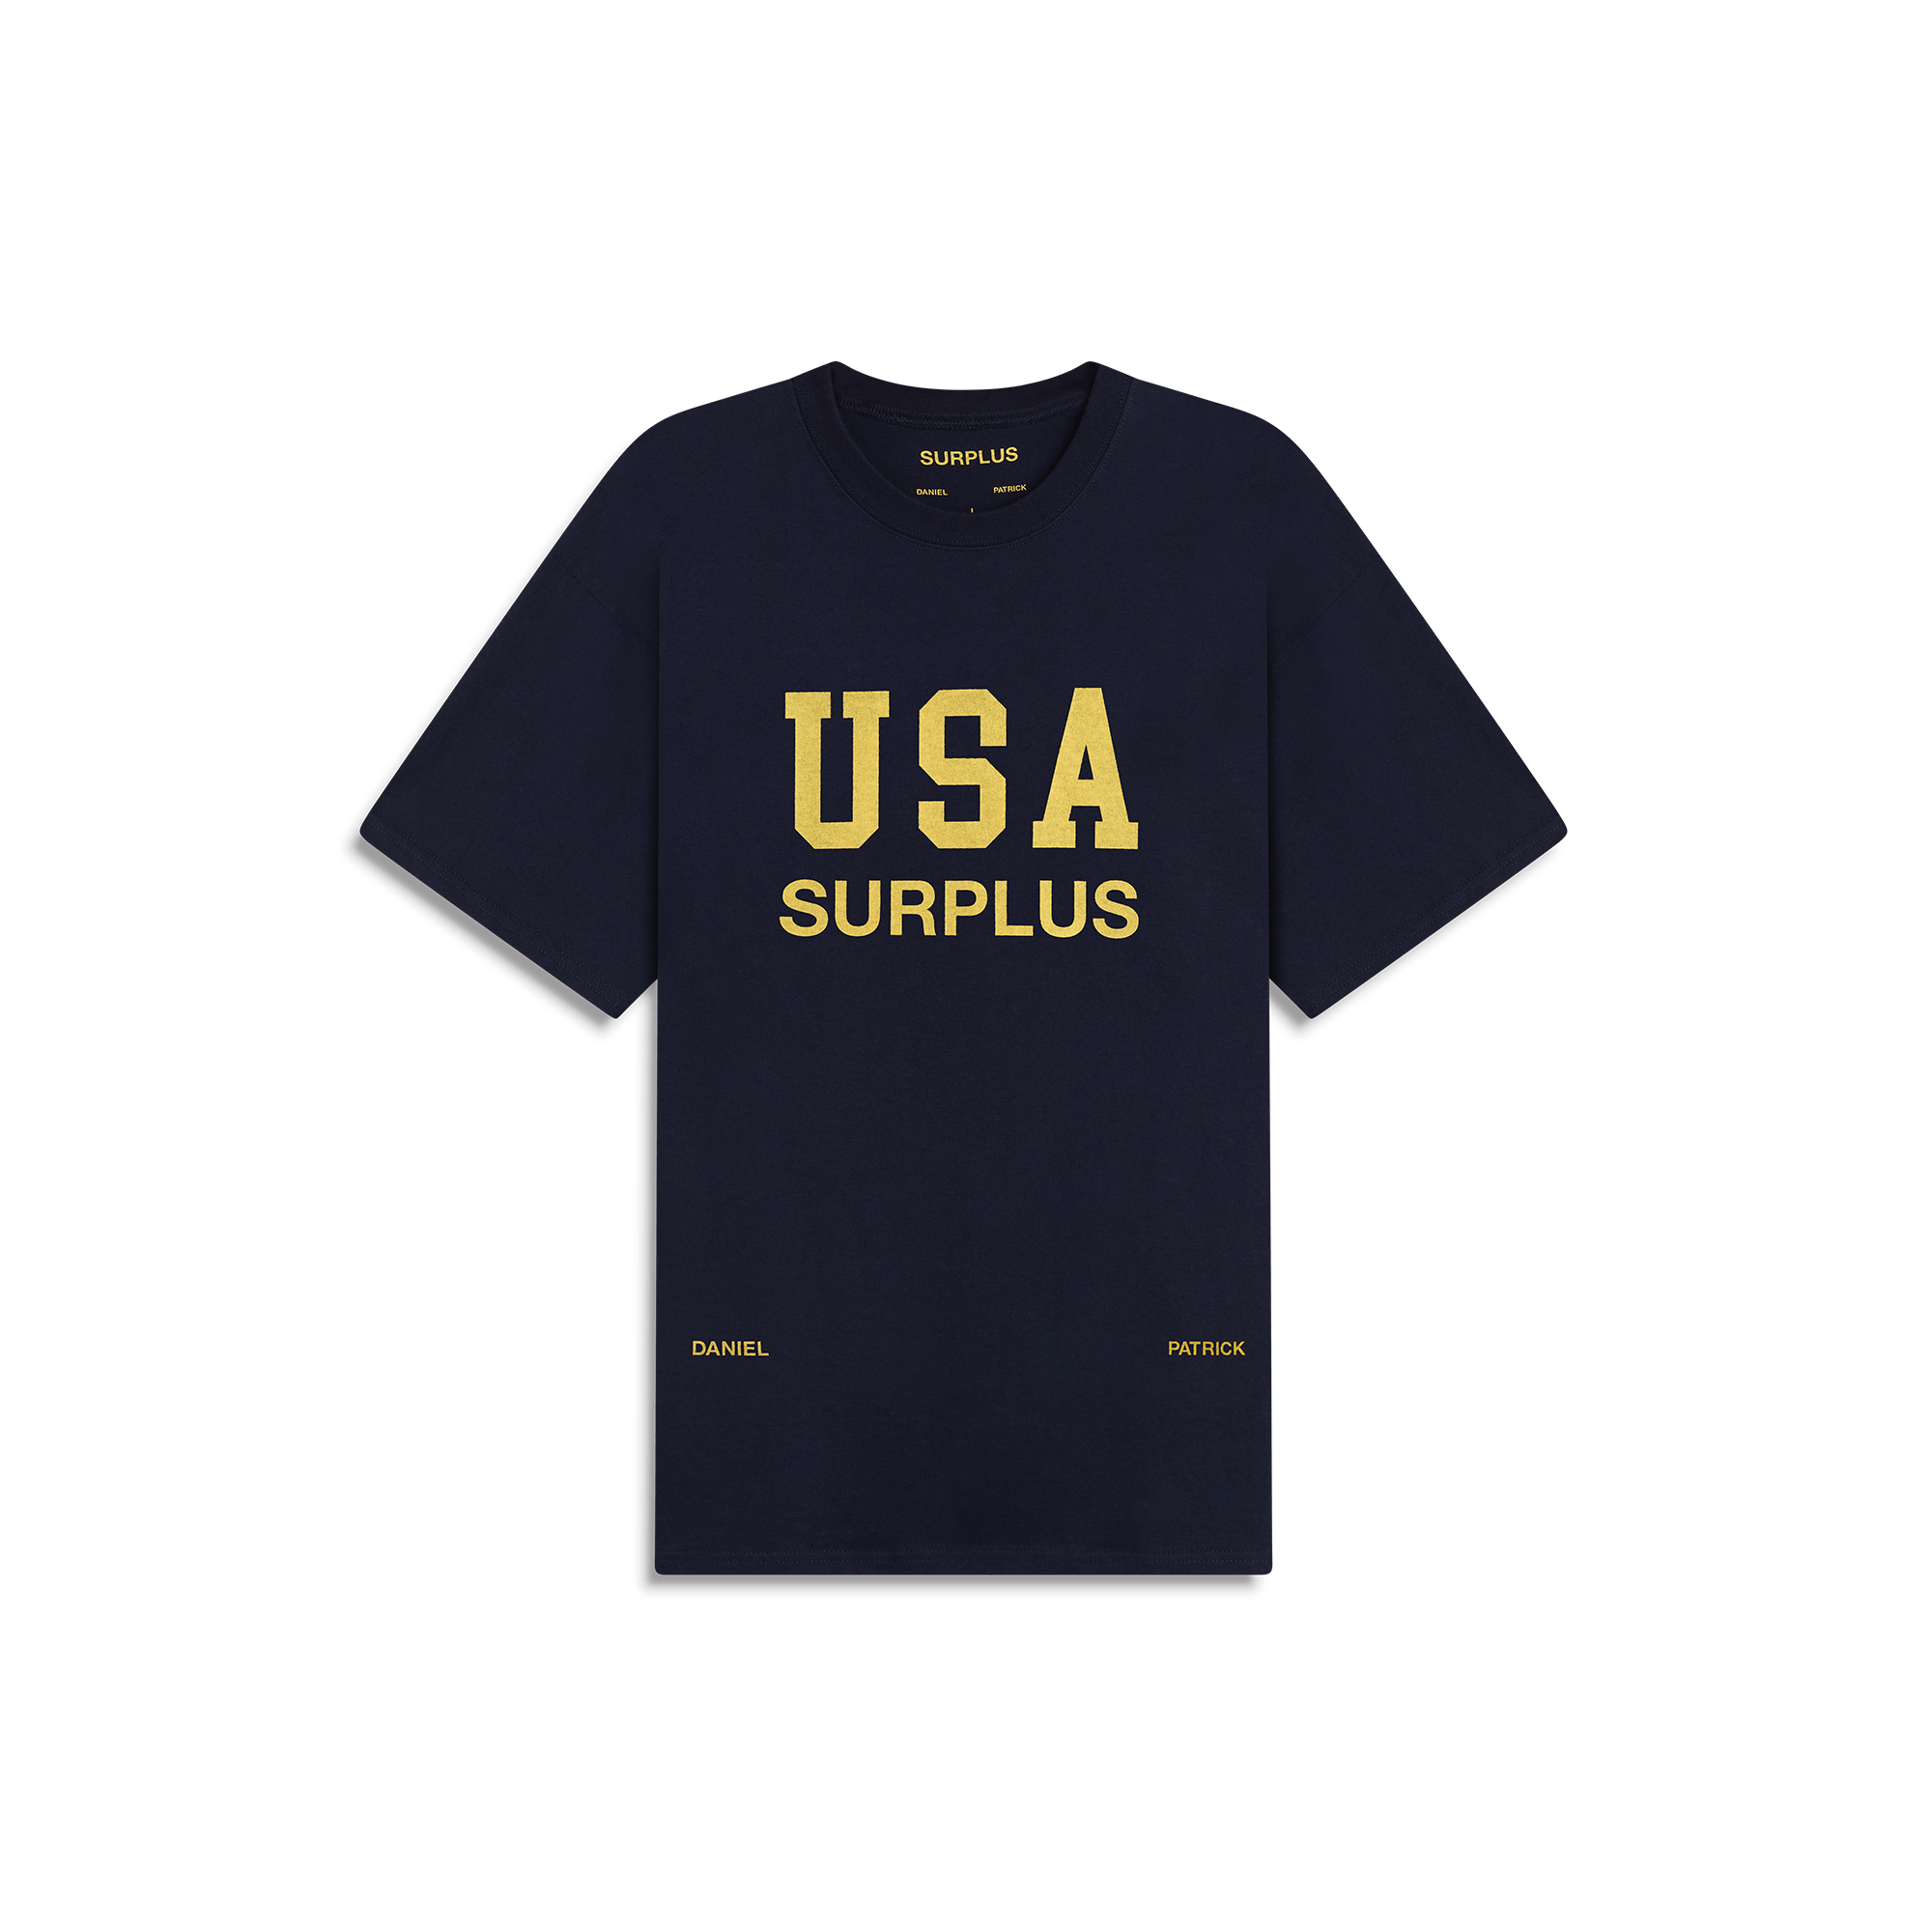 USA surplus tee / navy + yellow